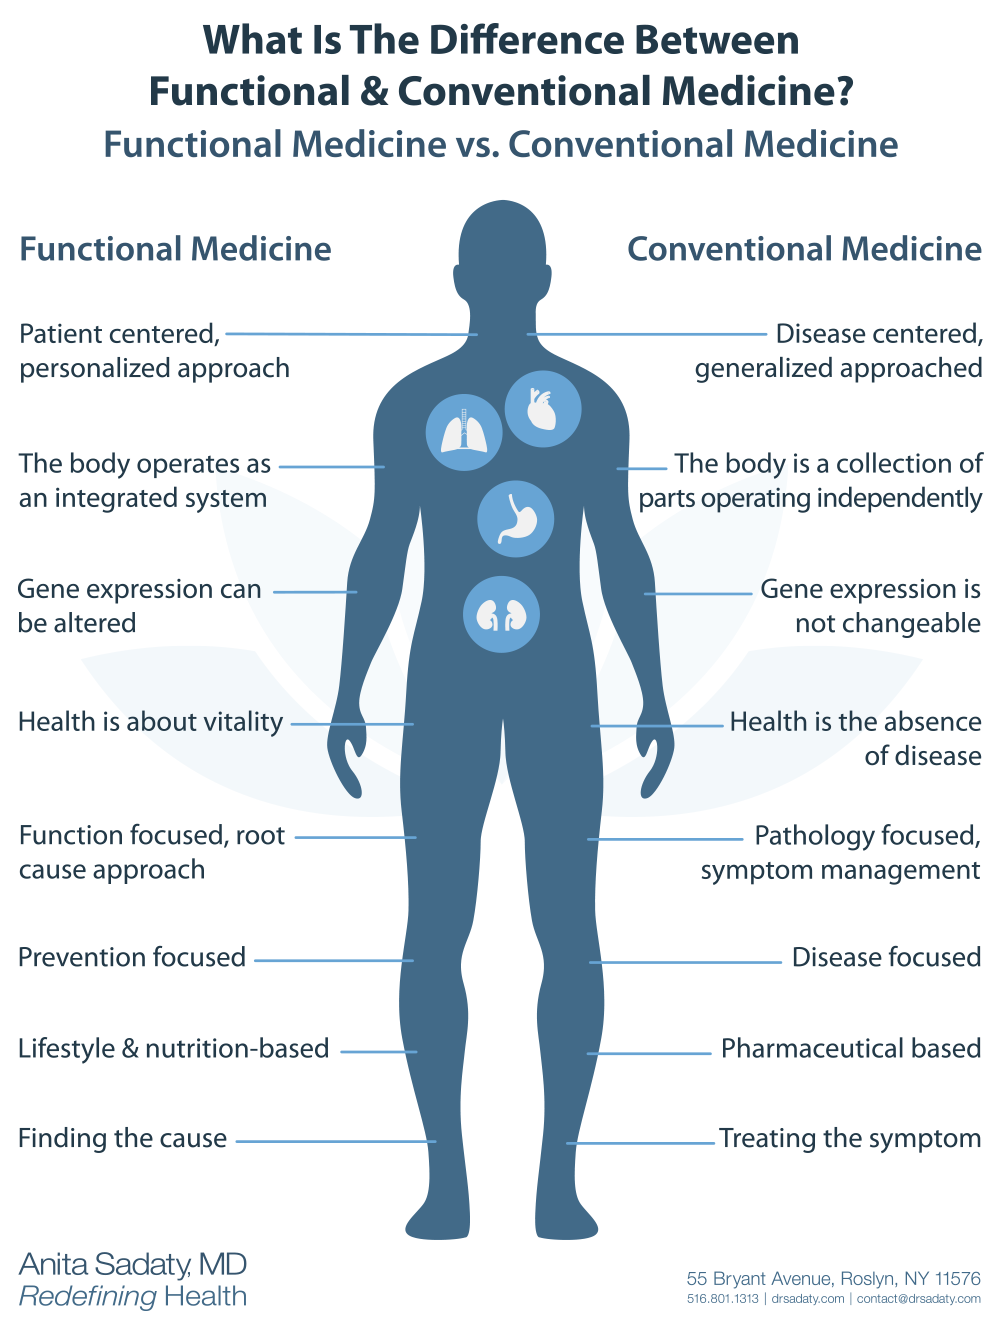 Functional Medicine vs. Conventional Medicine Infographic